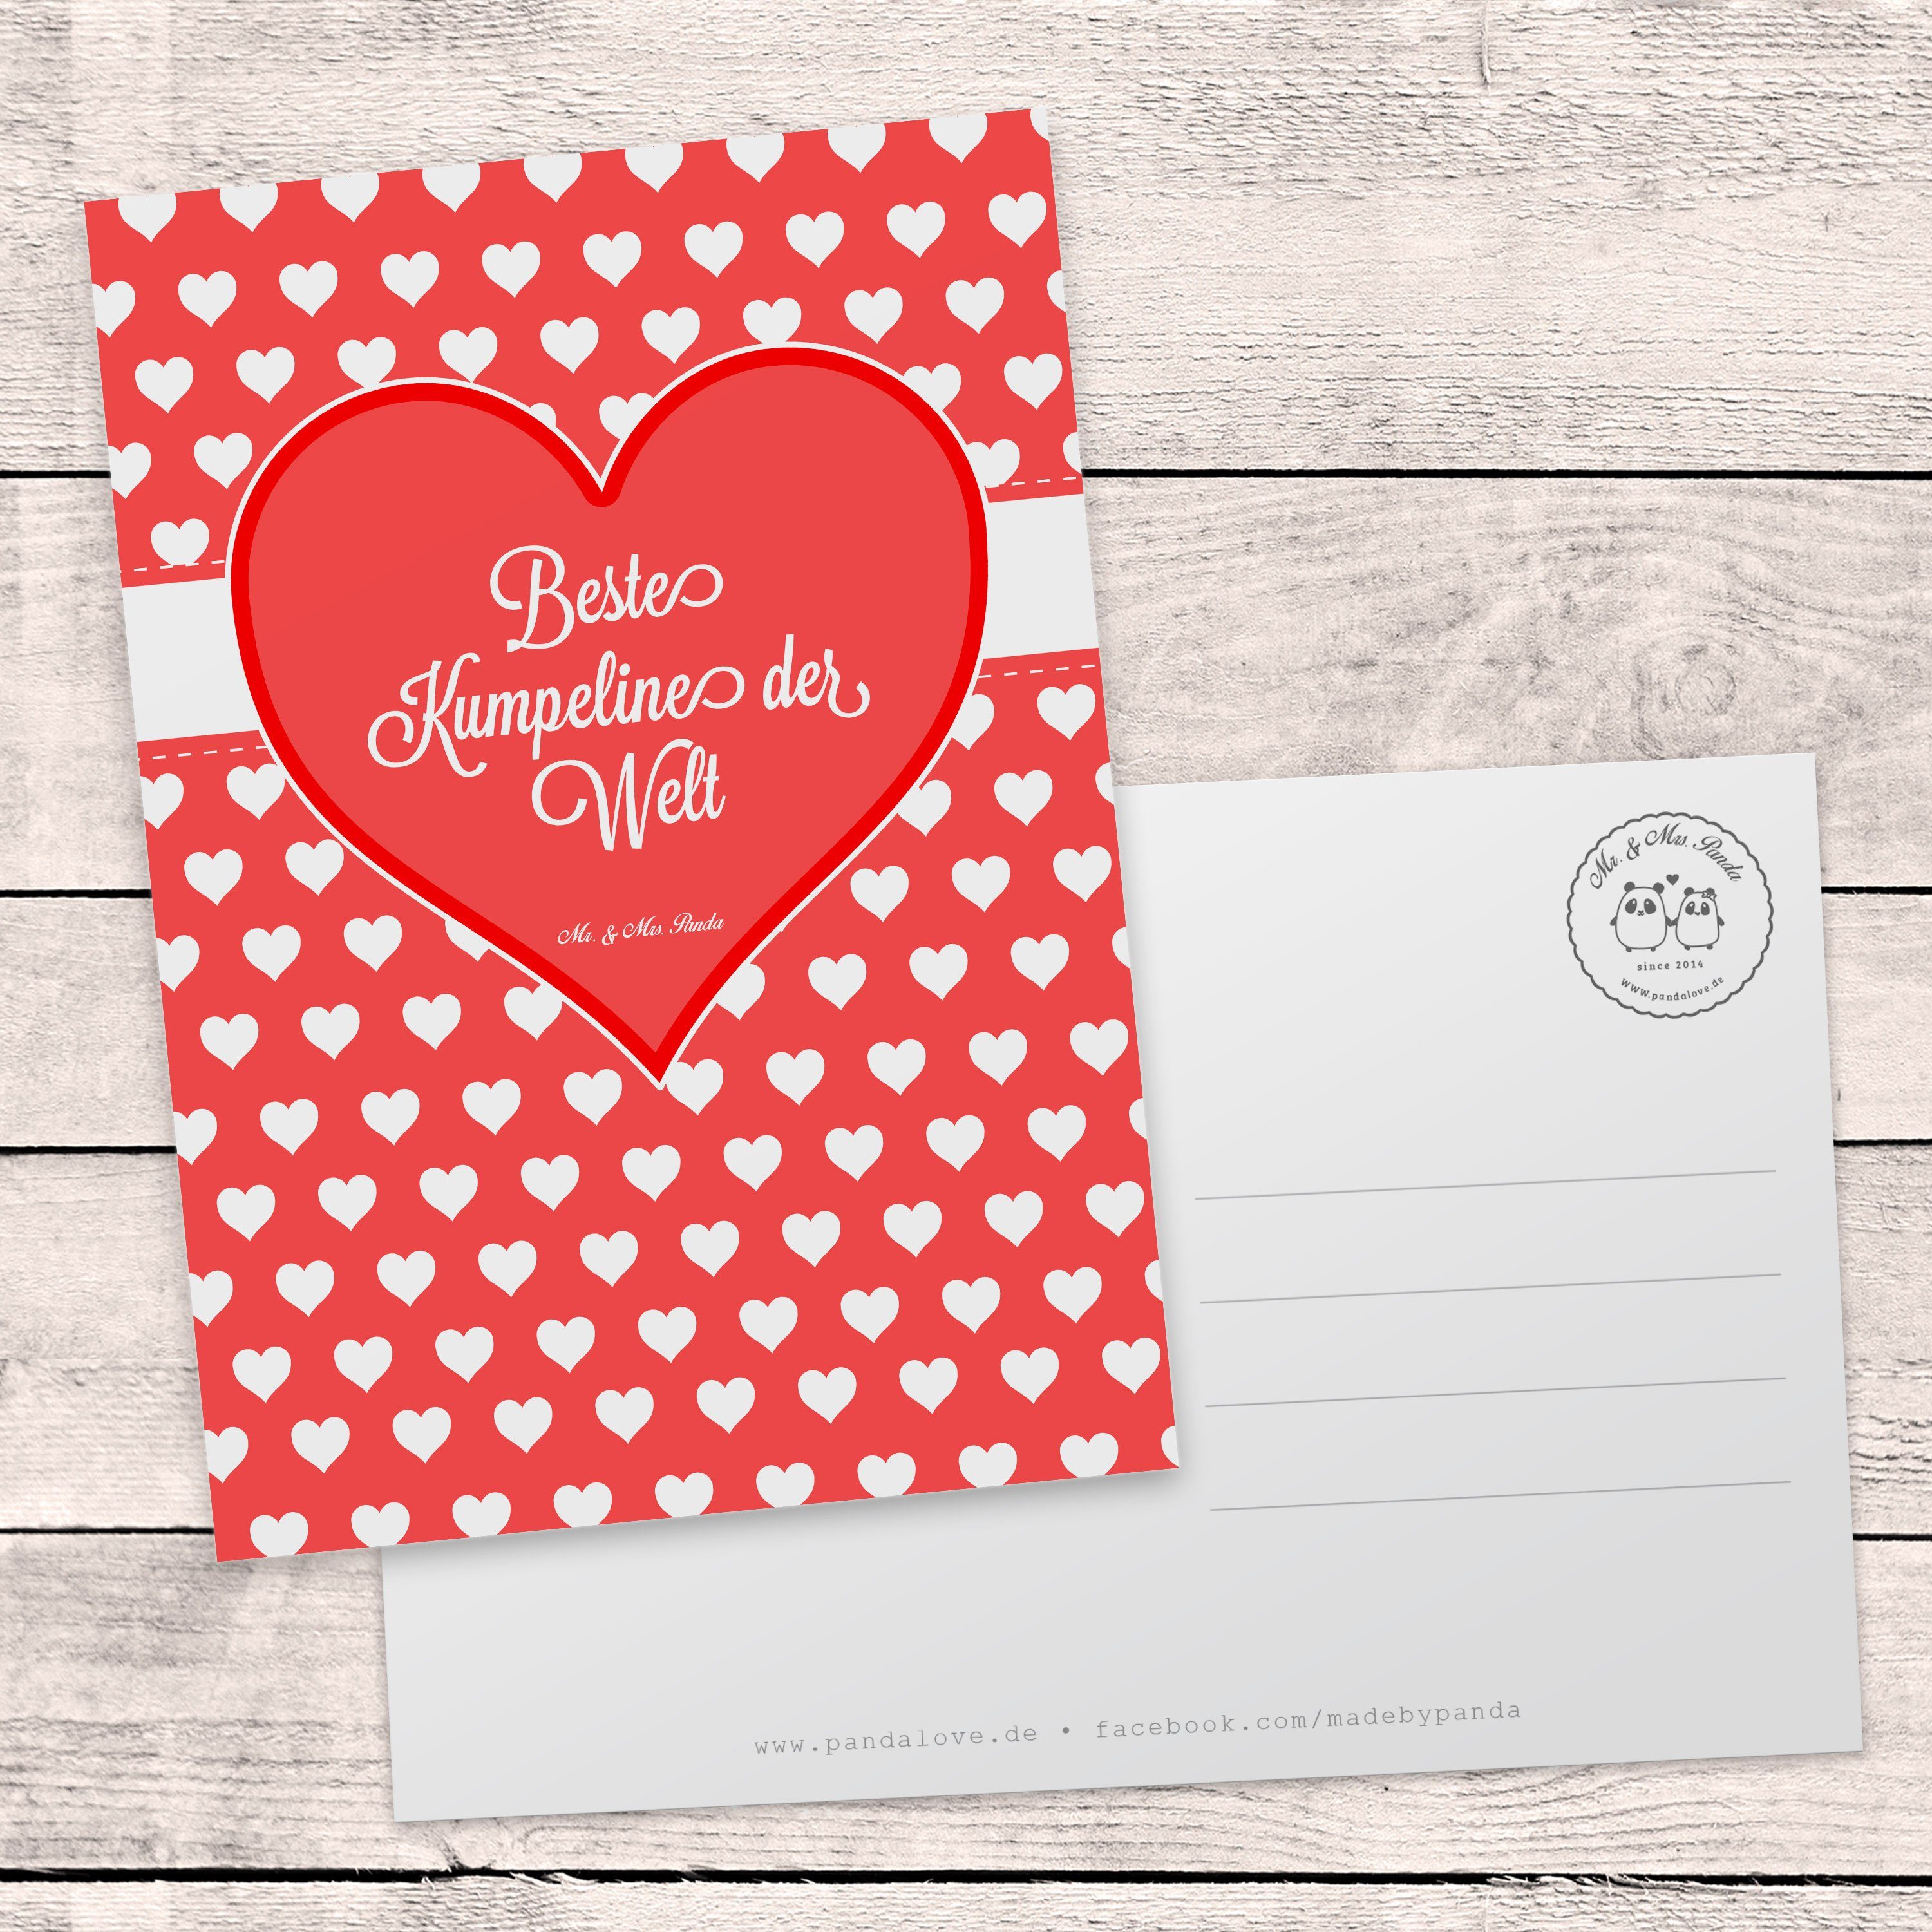 Mr. & Mrs. Panda Postkarte Kumpeline - Geschenk, Einladungskarte, Einladung, Geschenkkarte, Gruß | Grußkarten